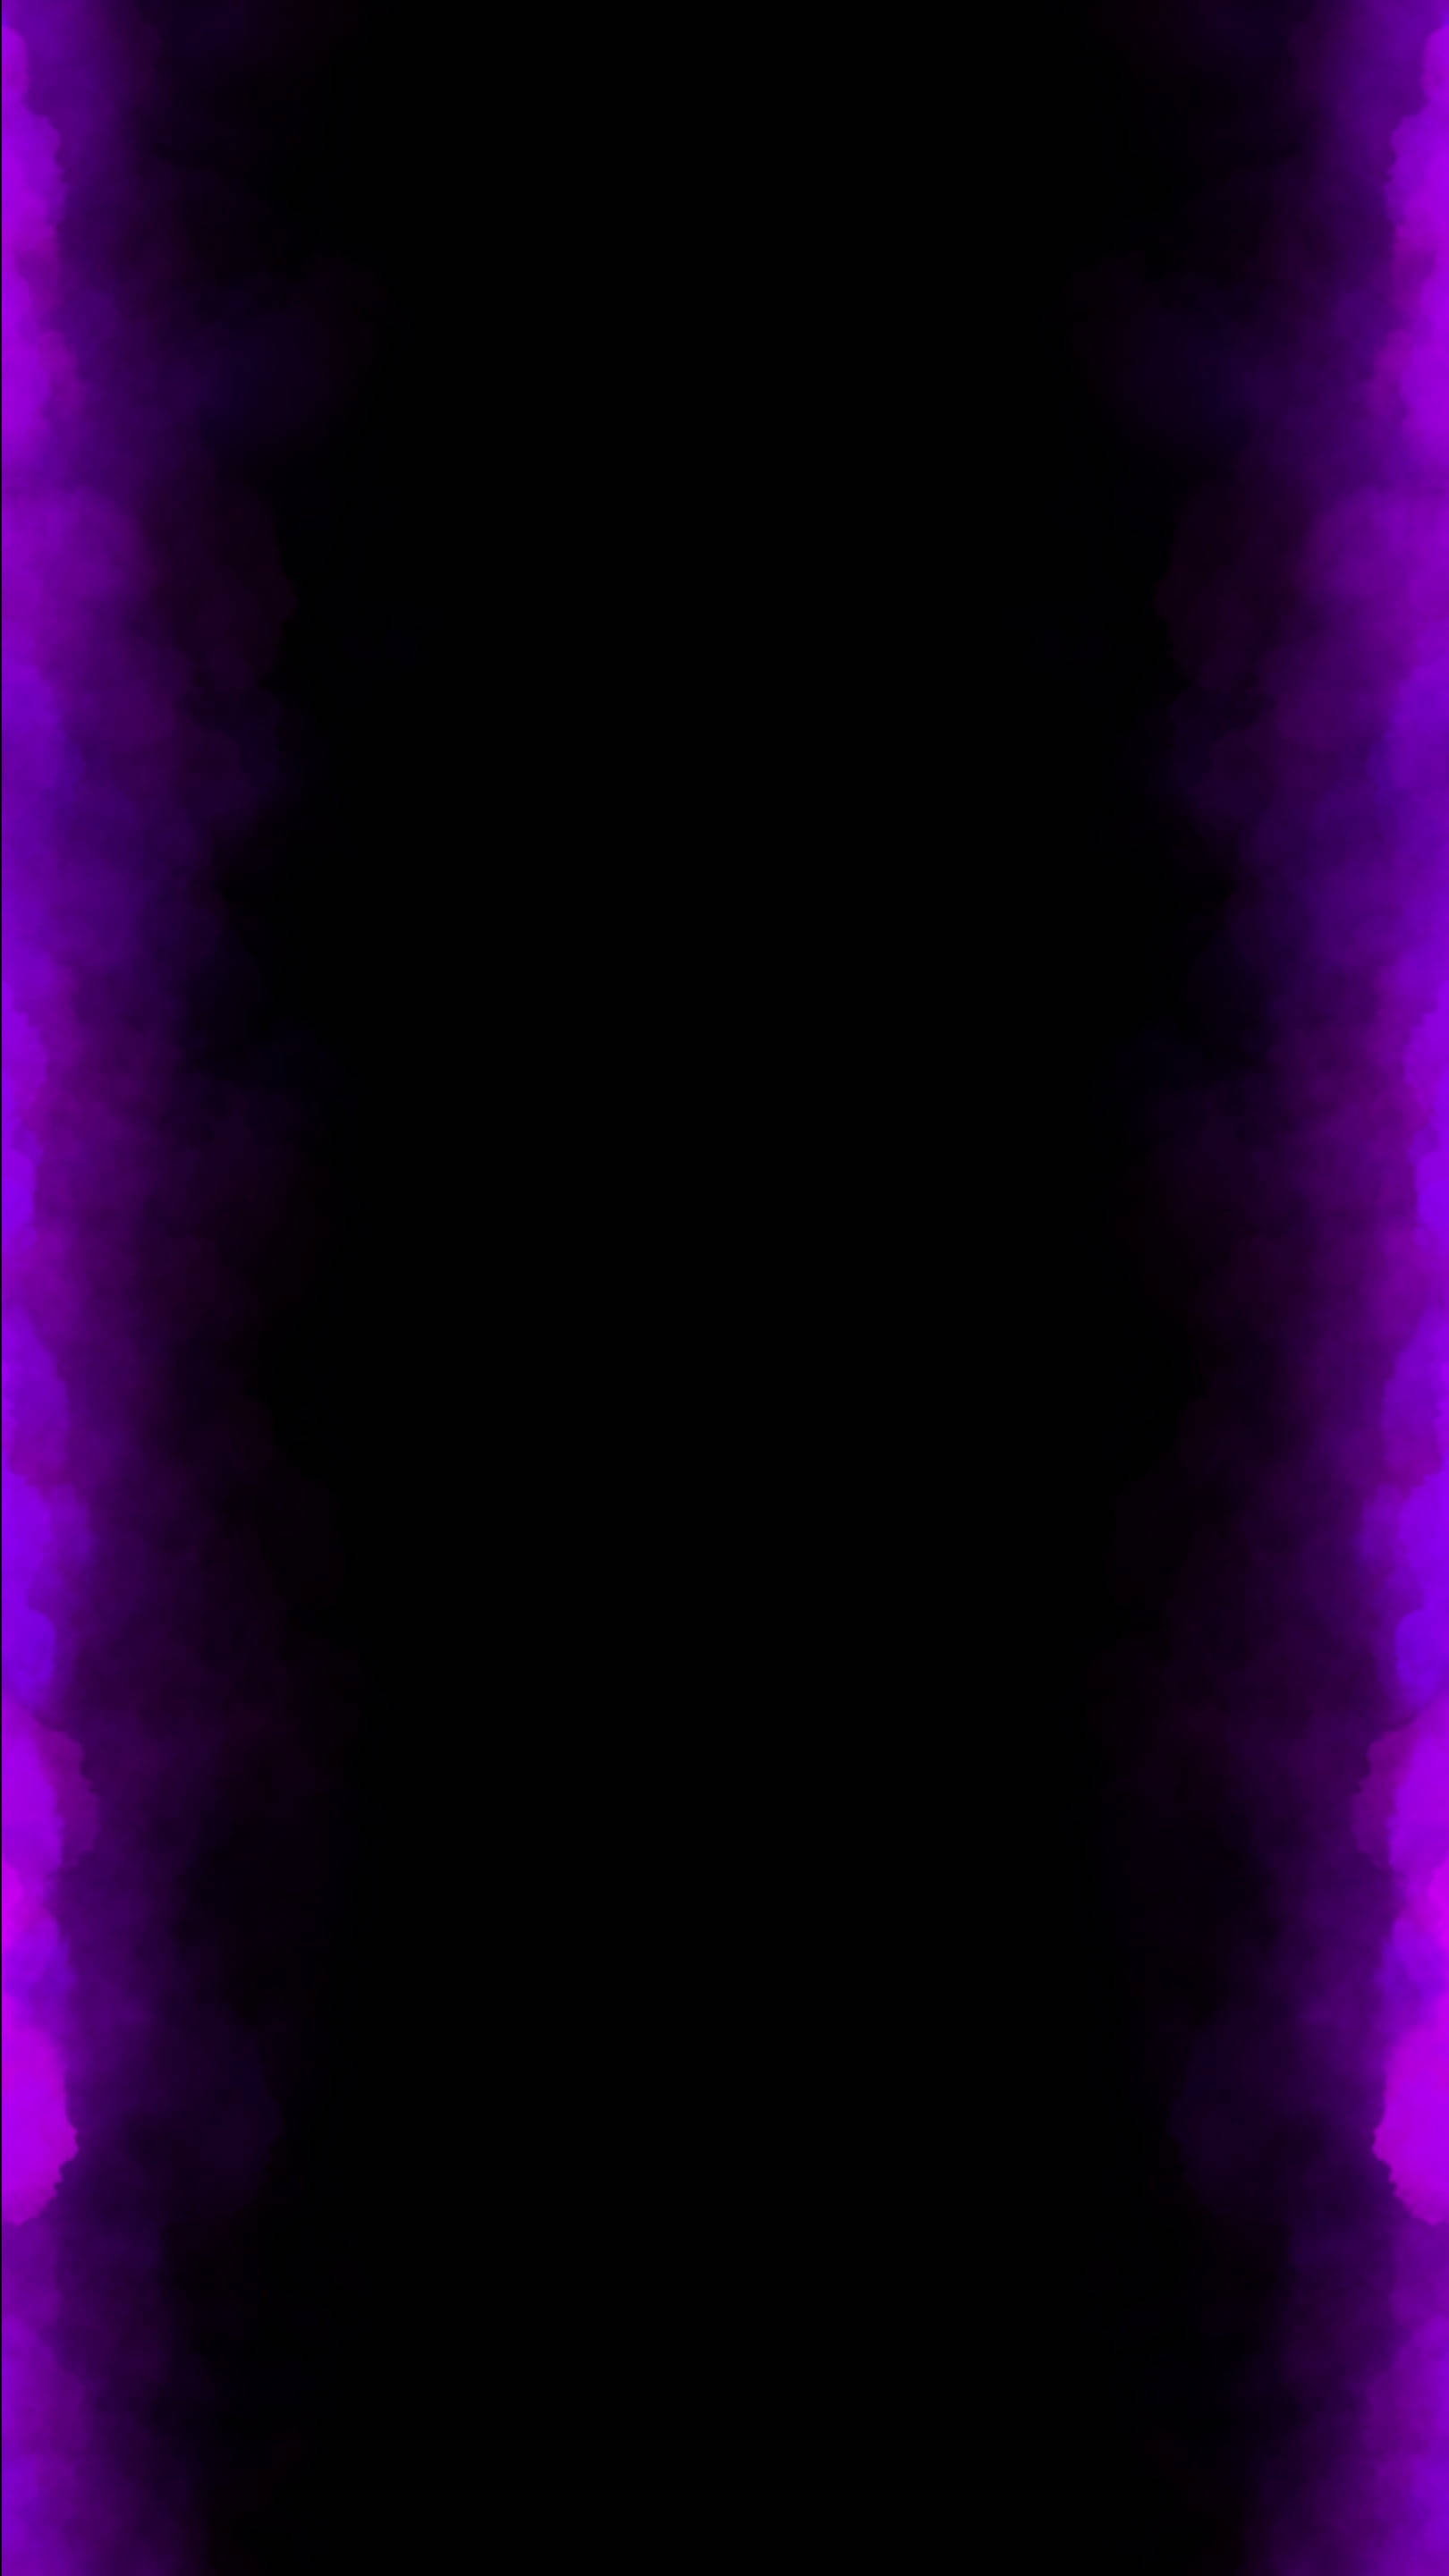 Dark Wallpaper-Purple by AHelton84 on DeviantArt